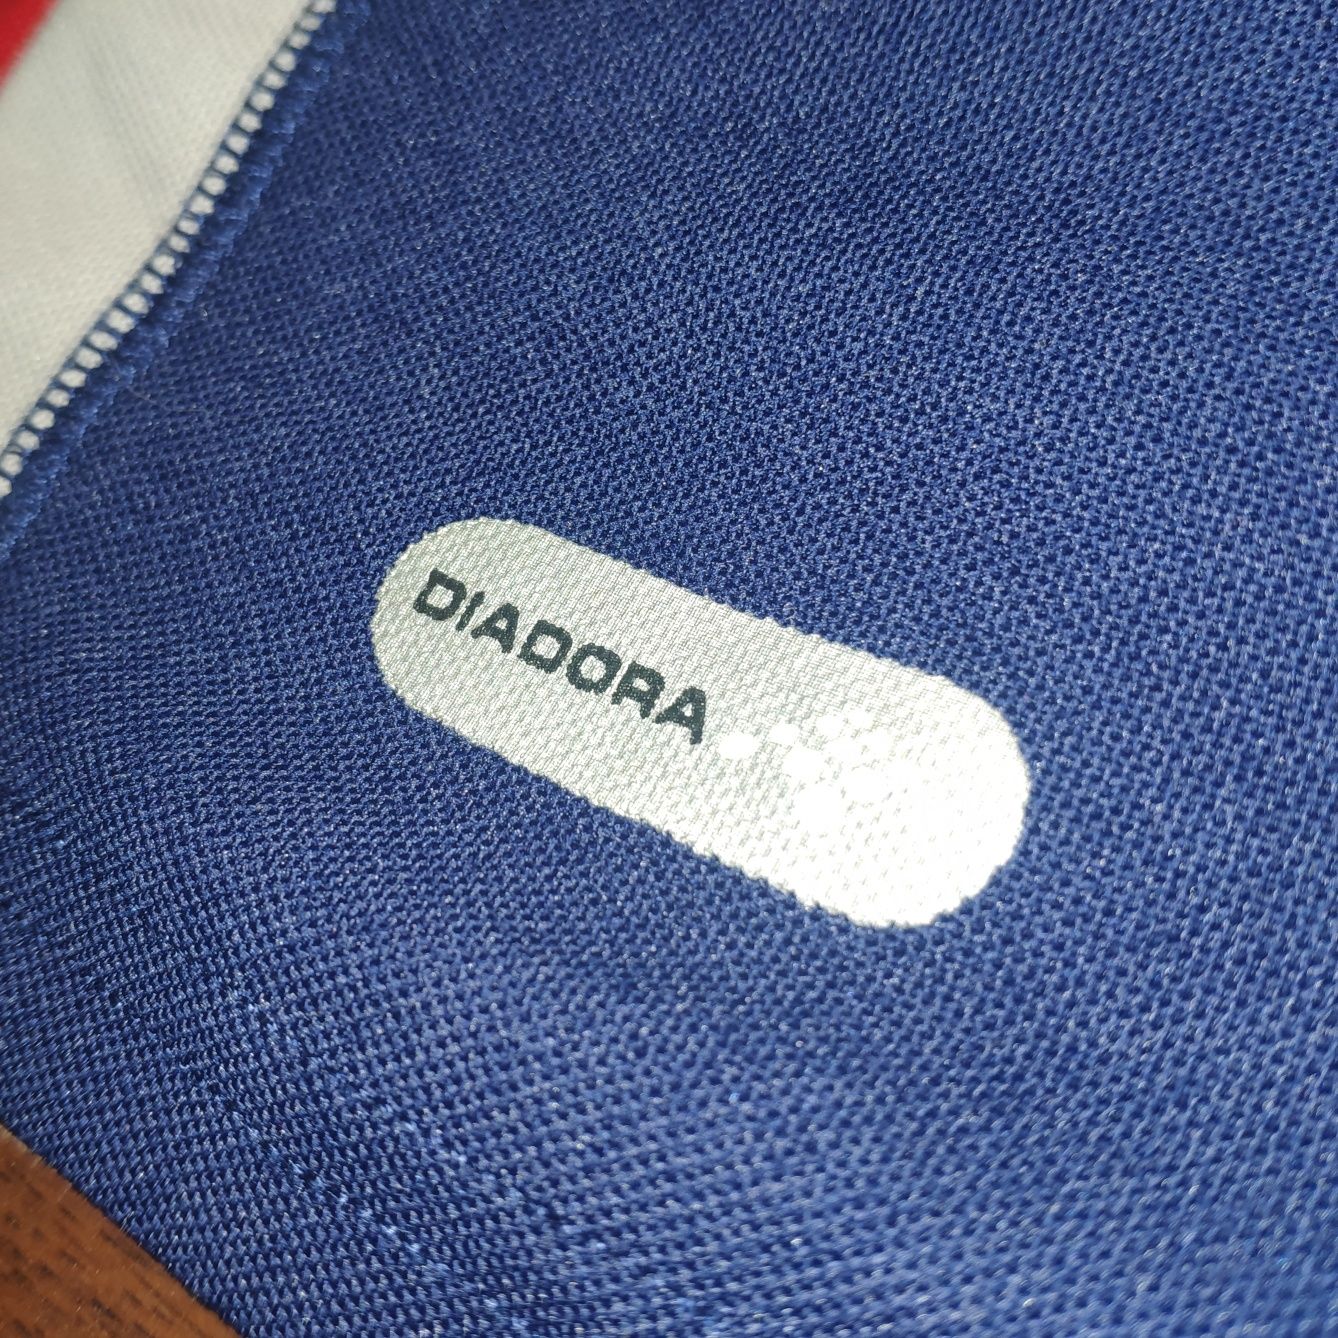 Футболка Diadora - Watford FC, XL